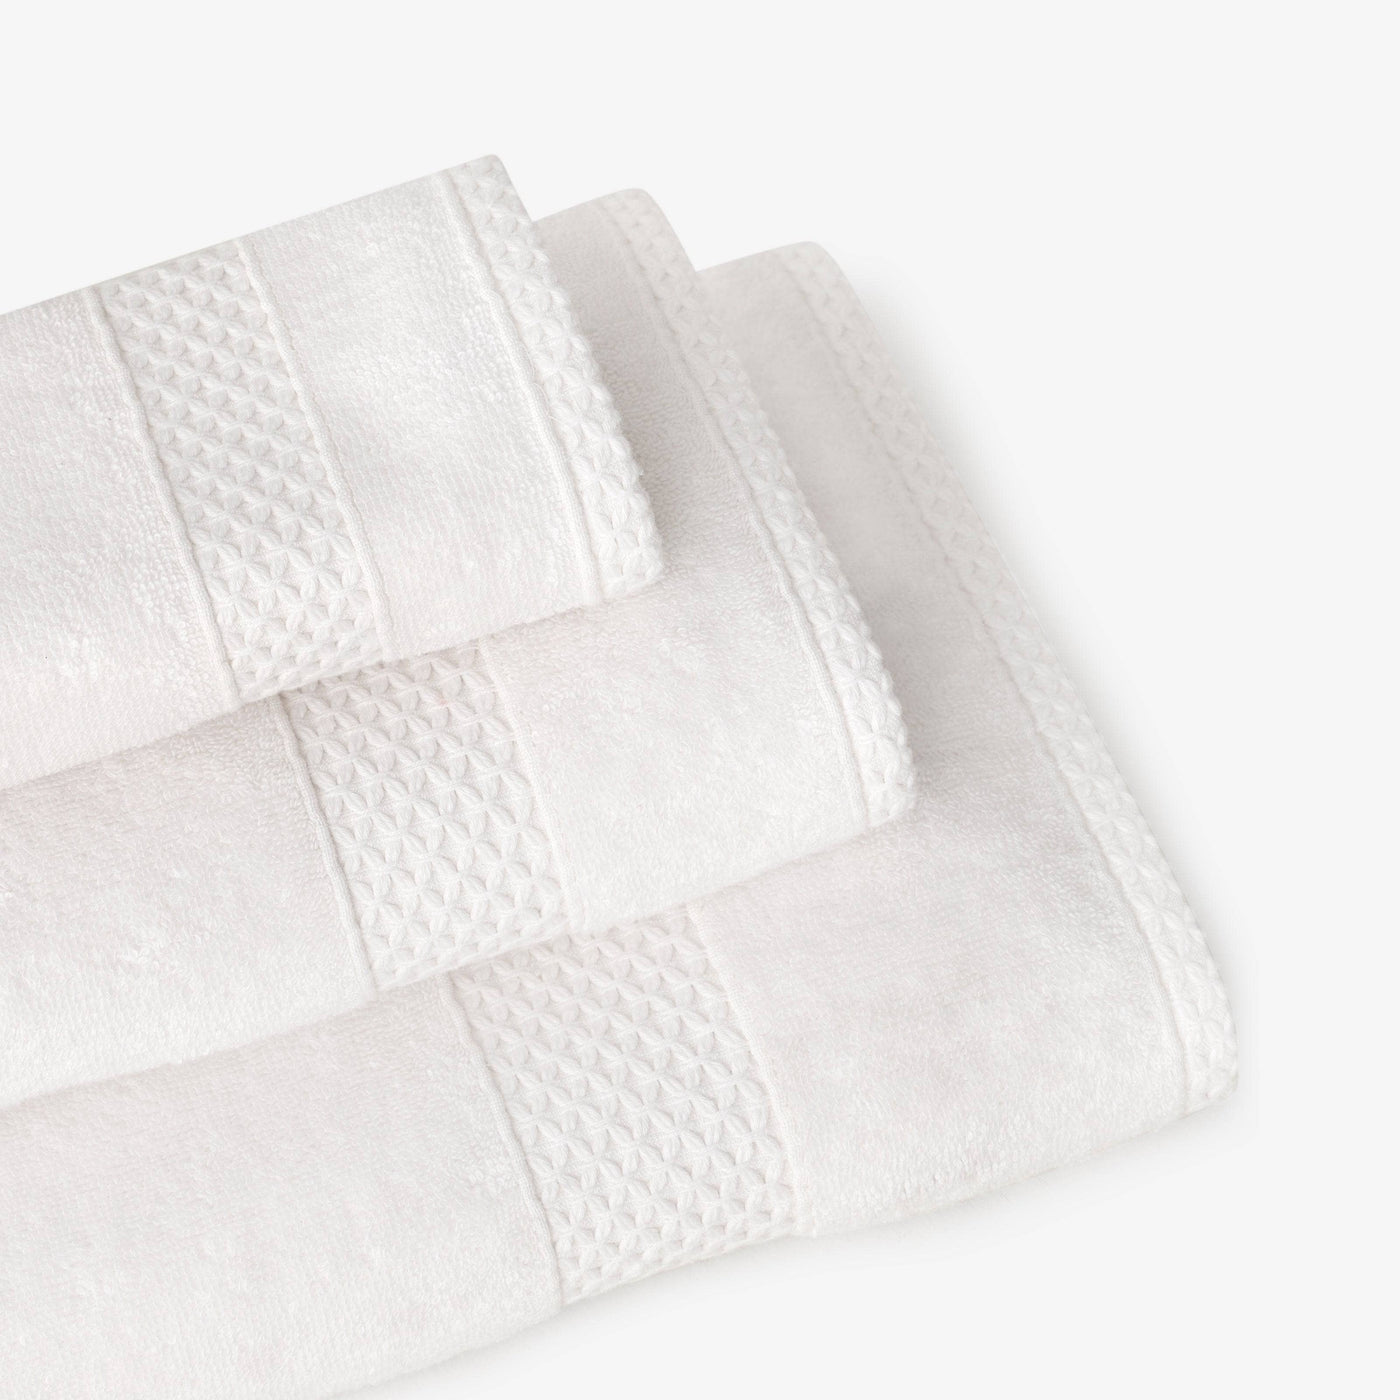 Aqua Fibro Extra Soft 100% Turkish Cotton Face Cloth, Off-White 3